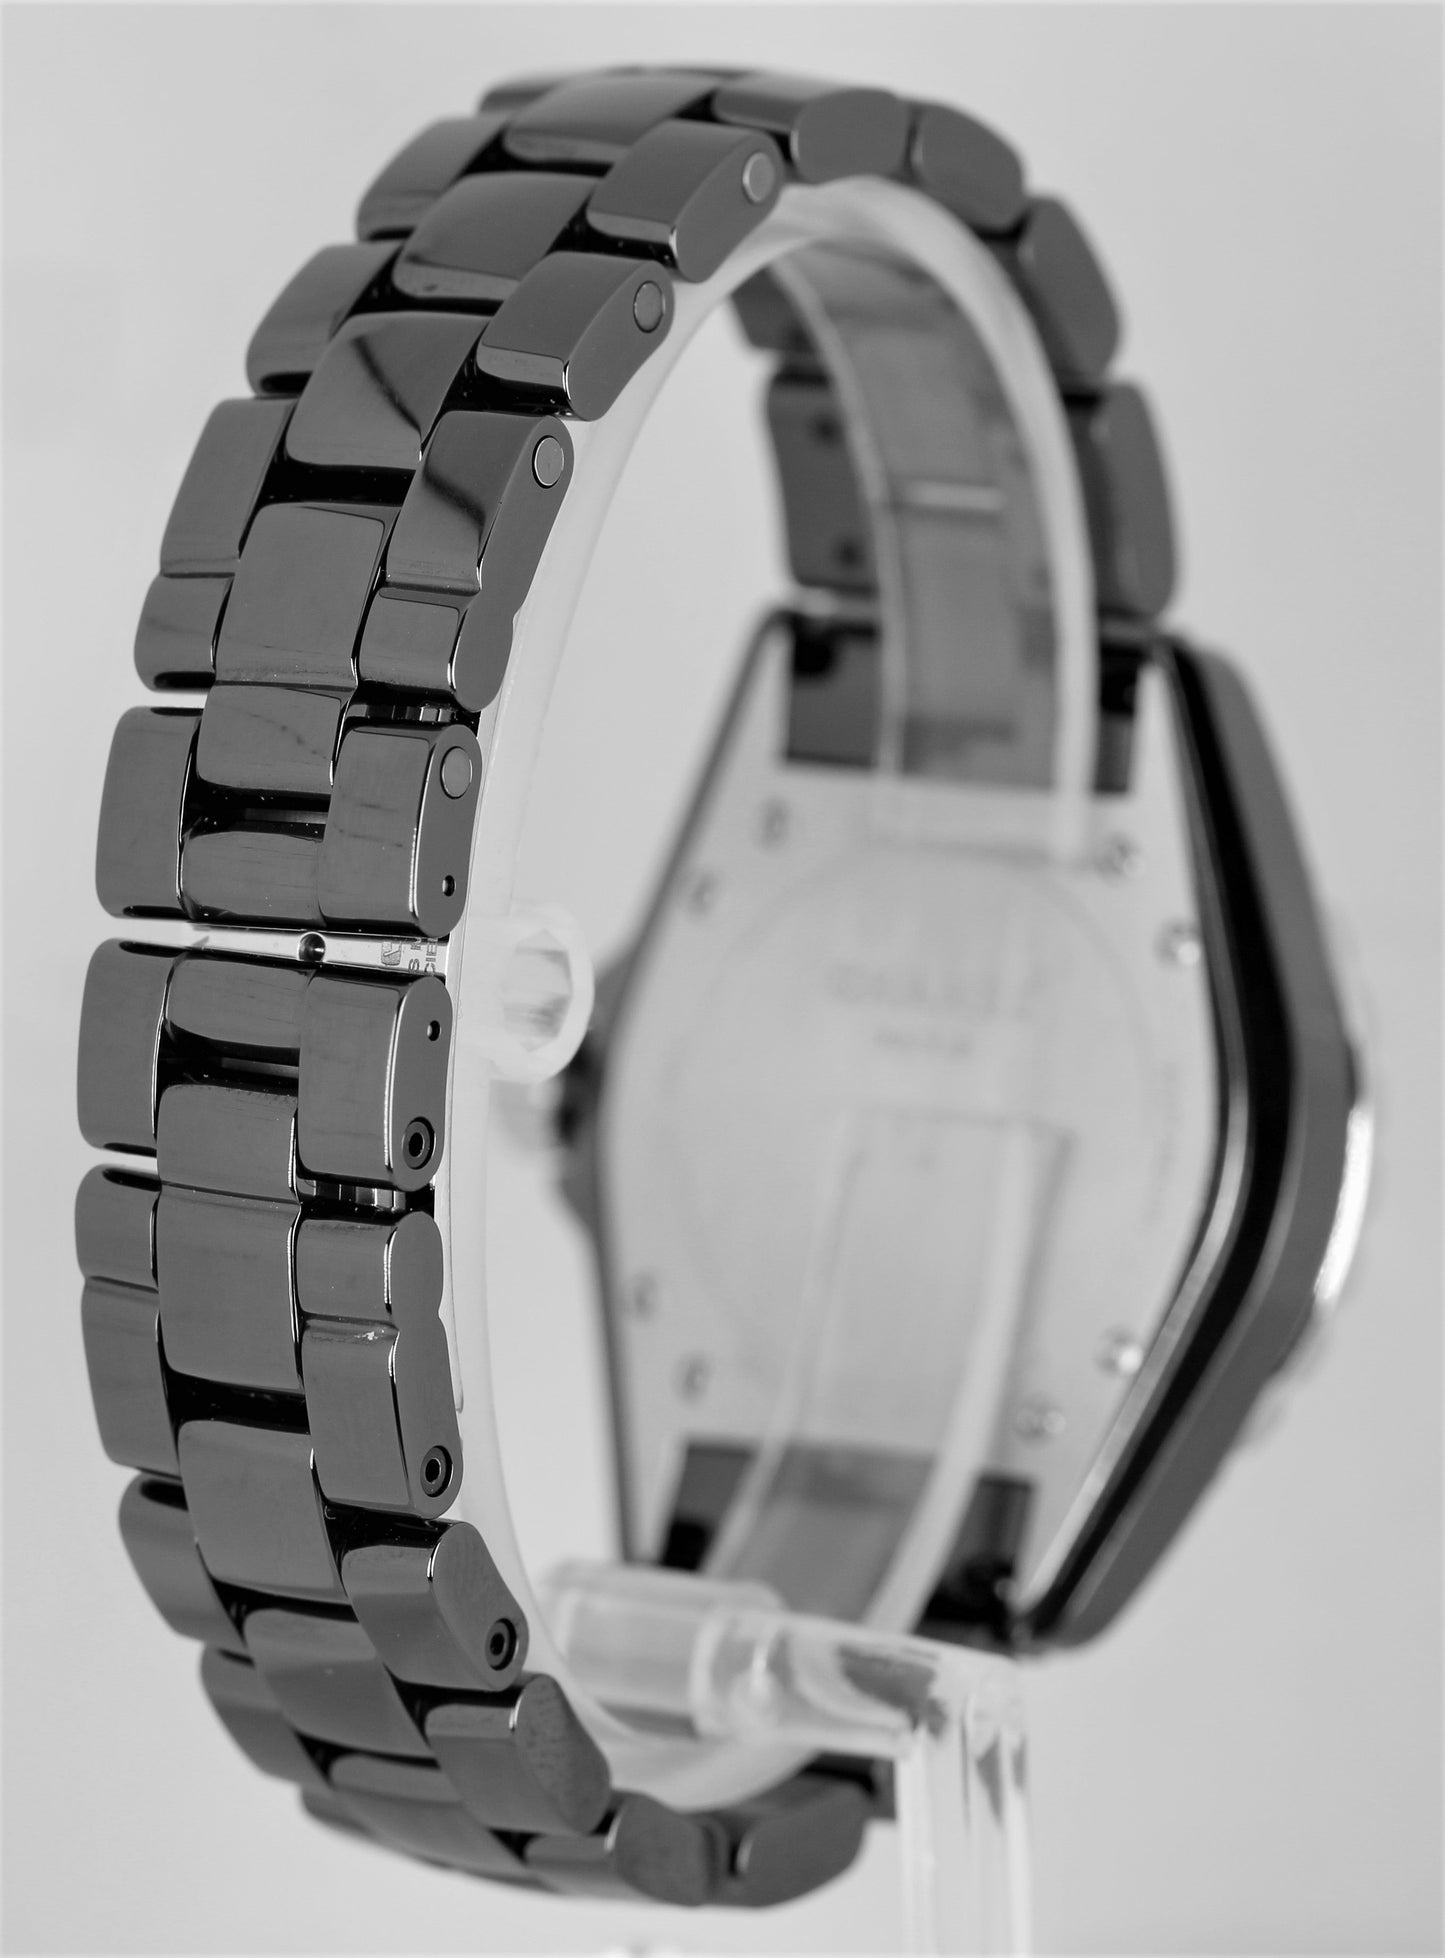 Chanel J12 Black Ceramic Automatic Black RUBY Dial 38mm H1635 Watch